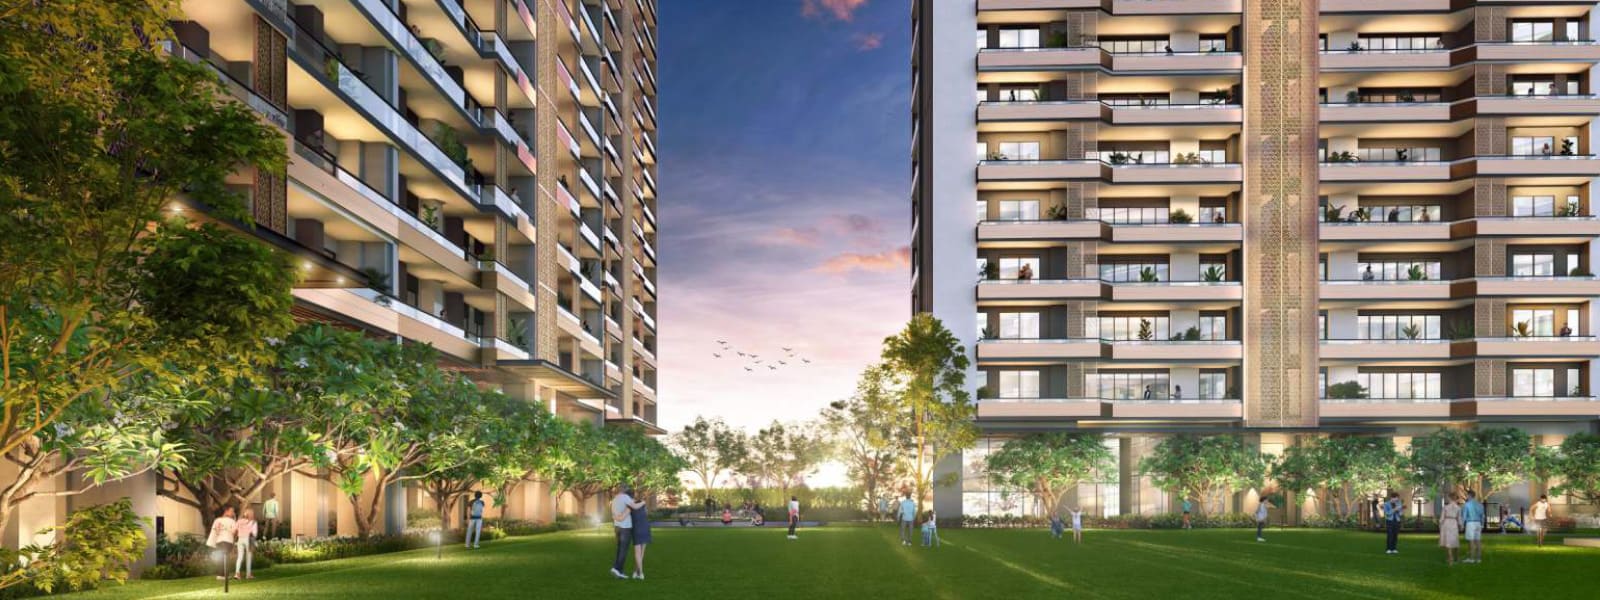 Puri Diplomatic Residences Luxury Apartments Sector 111 Gur - Haryana - Gurgaon ID1542205 3